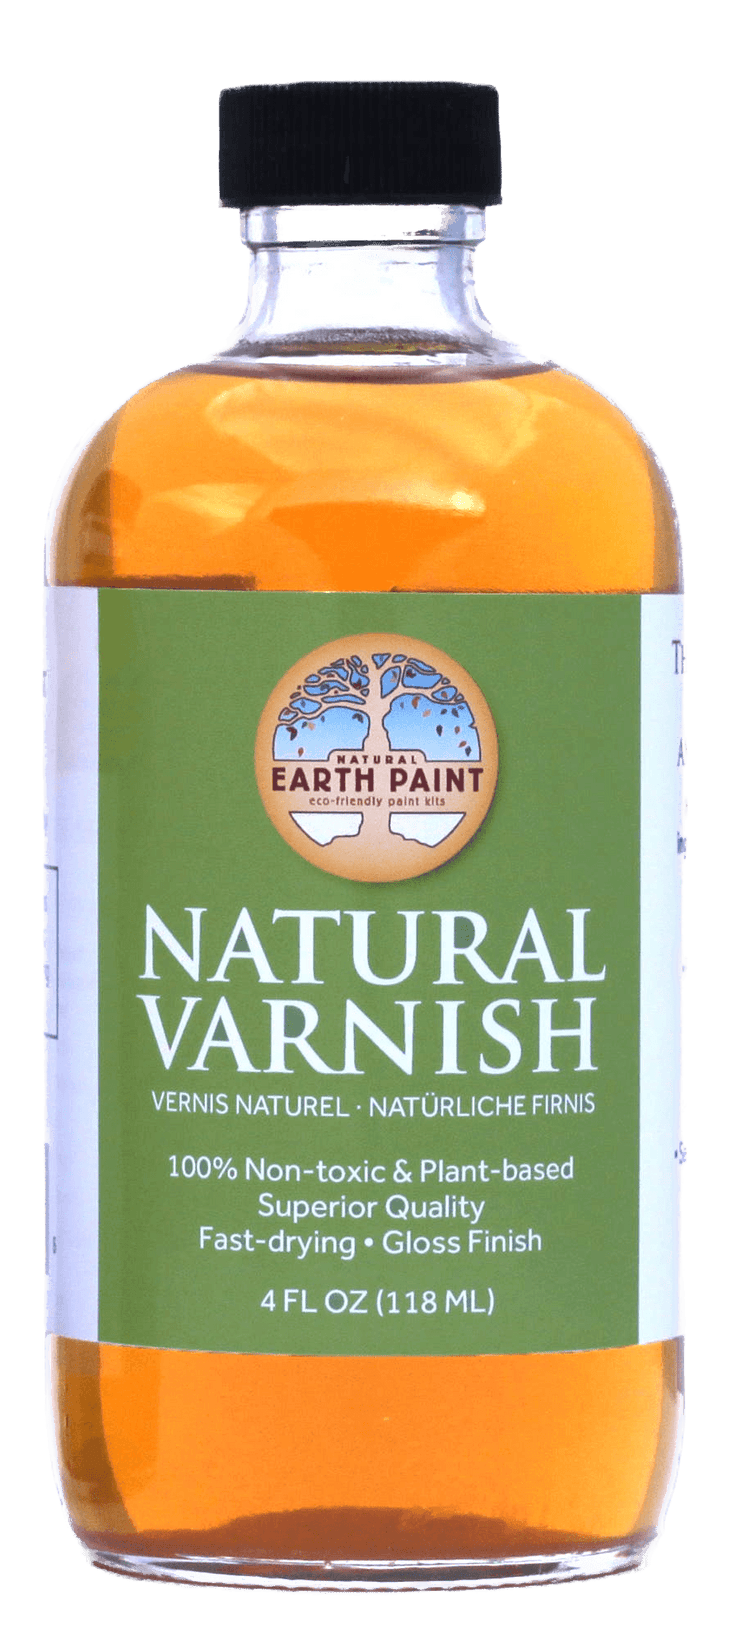 Natural Earth Paint - Non-toxic & Natural Varnish - NZ Health Store